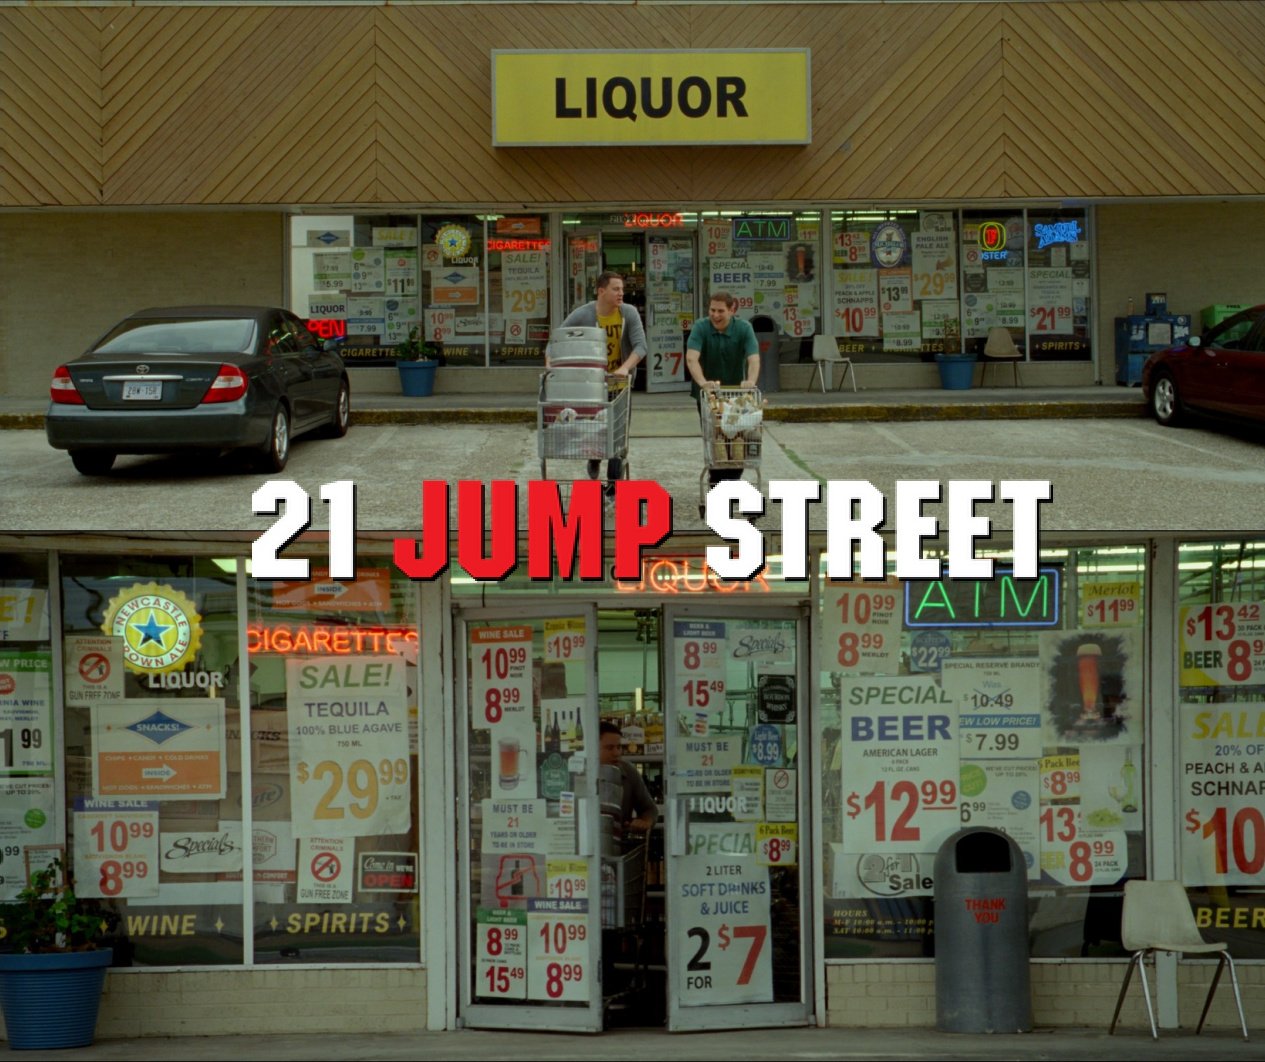 21 Jump Street (1).jpg